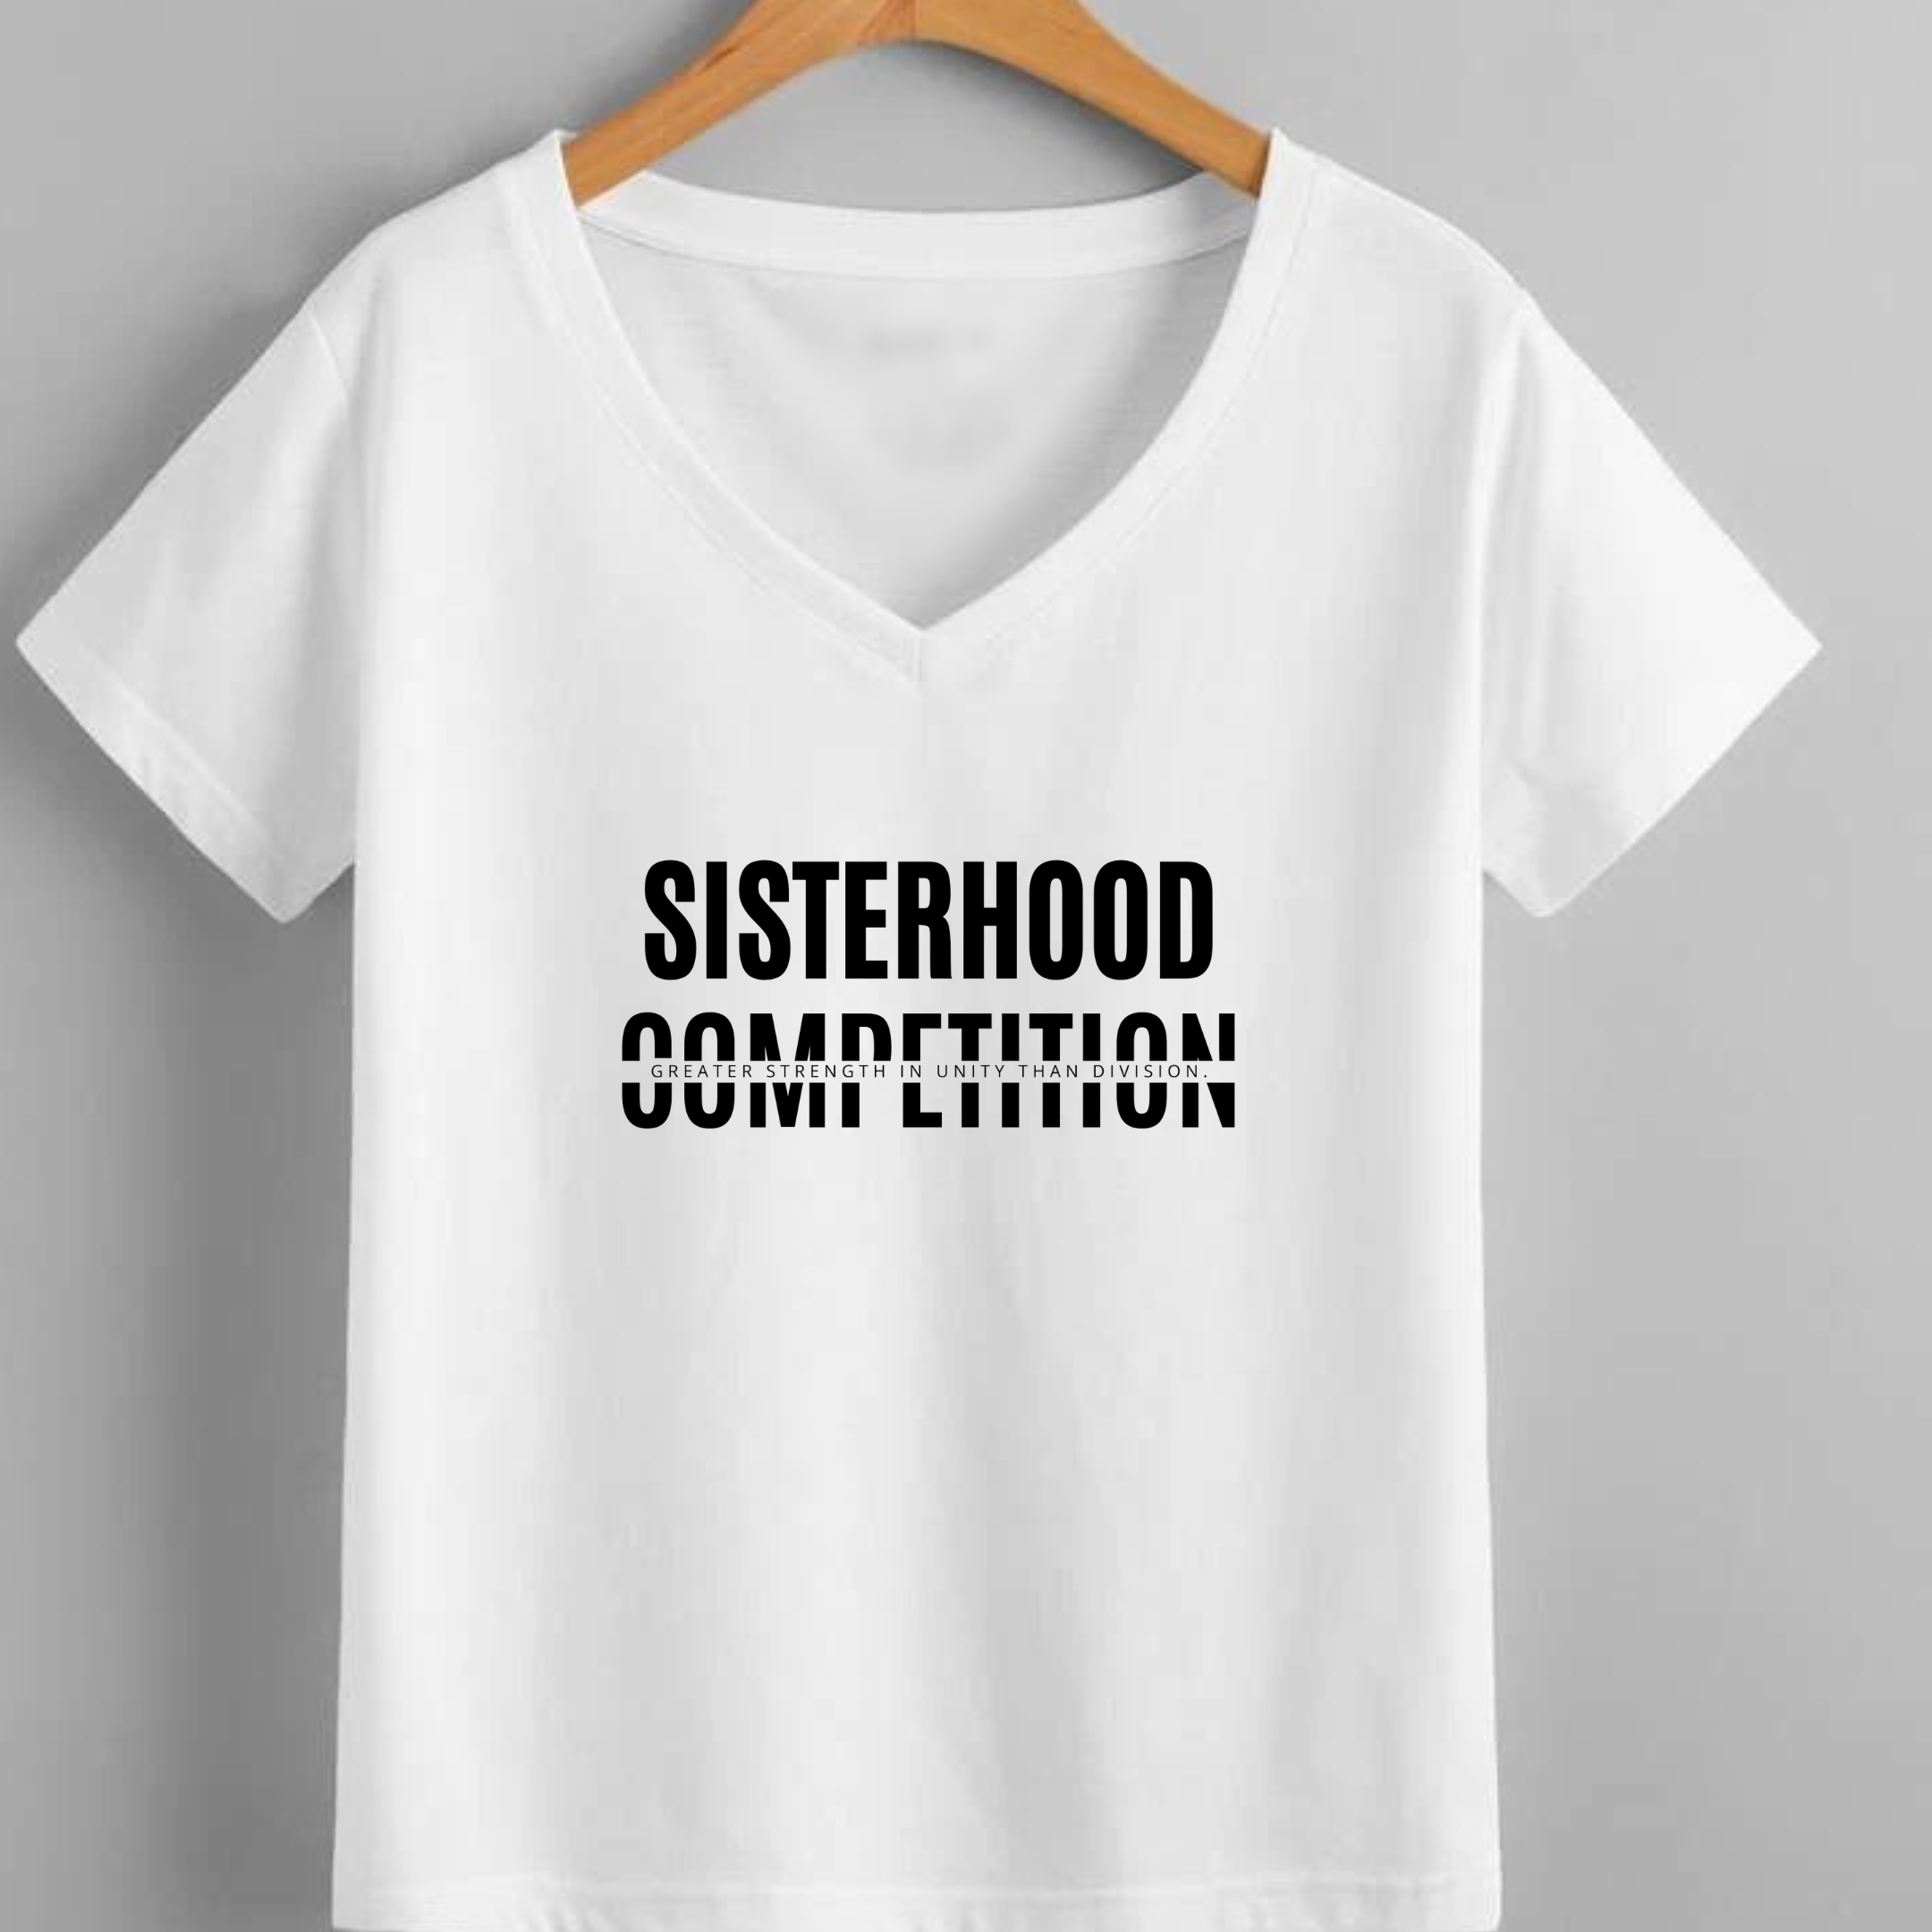 Sisterhood Over Competition Tshirt